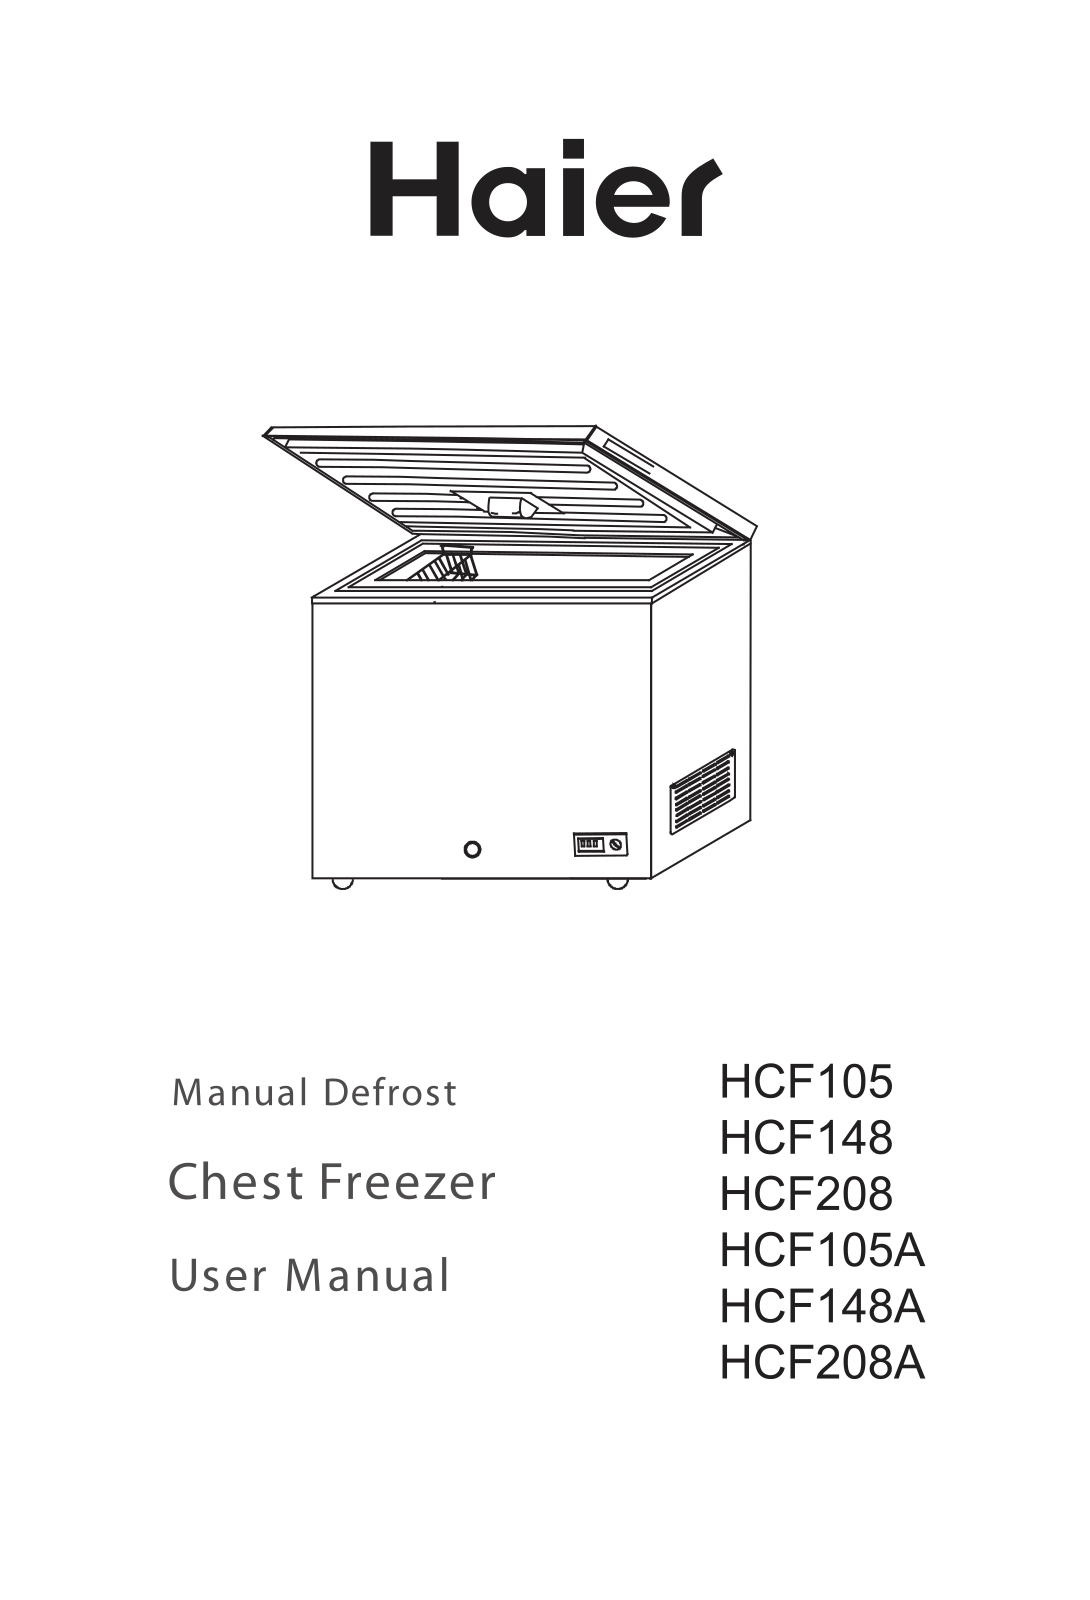 Haier HCF208A, HCF148A, HCF105A, HCF208, HCF148 Owner's Manual